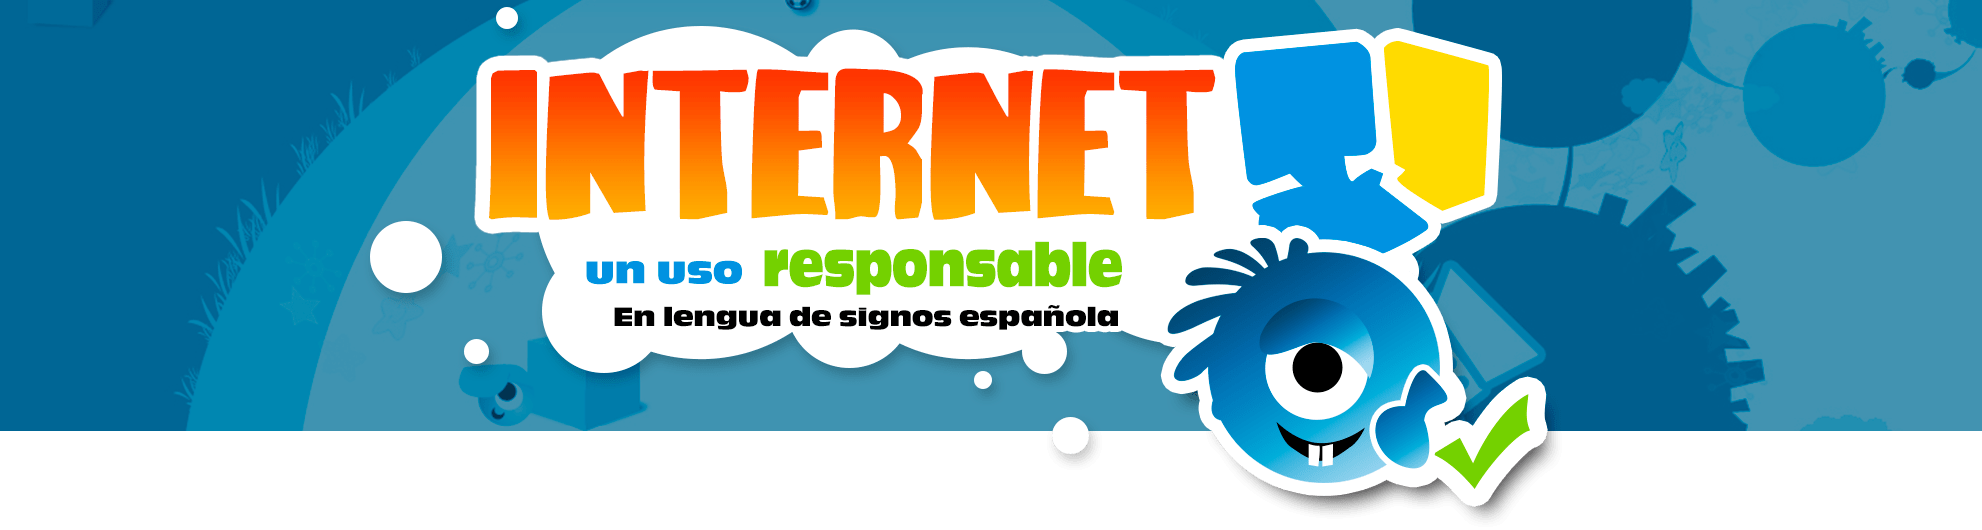 desc_internet-un-uso-responsable.png